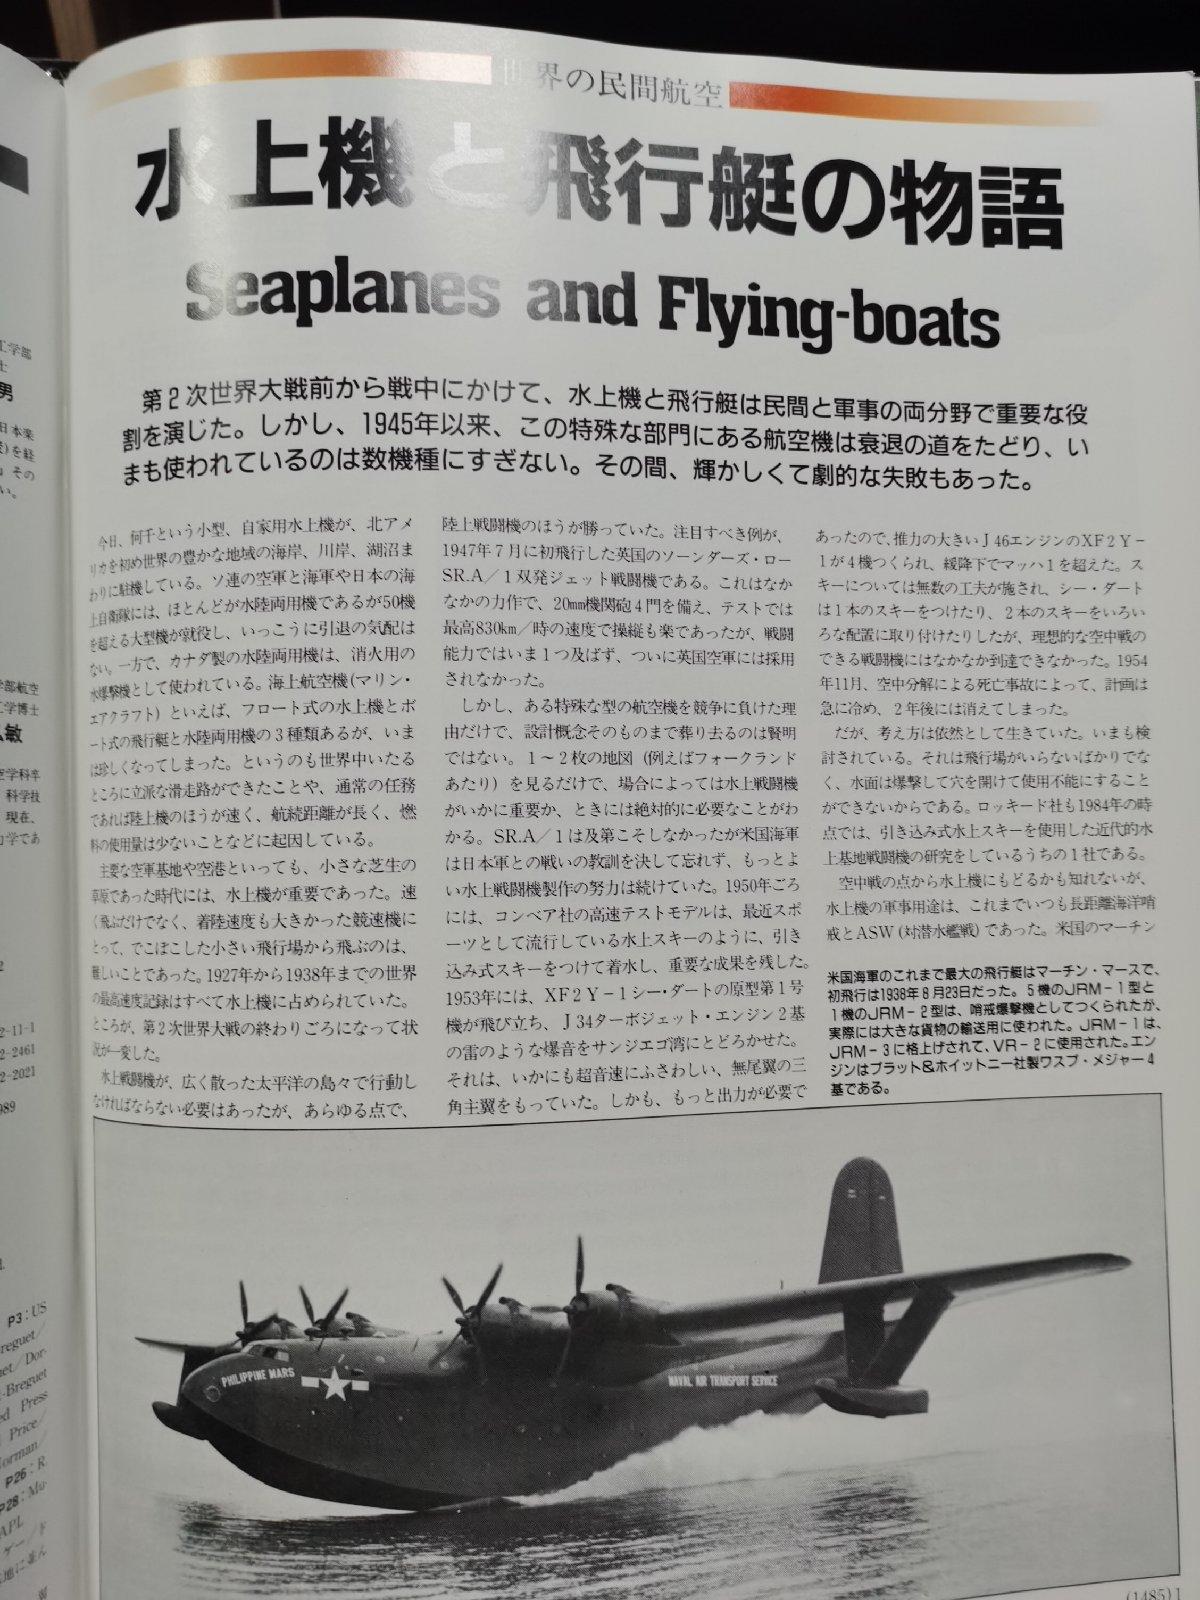 Sportavia Avion Planeur Rf-5 · The Encyclopedia of Aircraft David